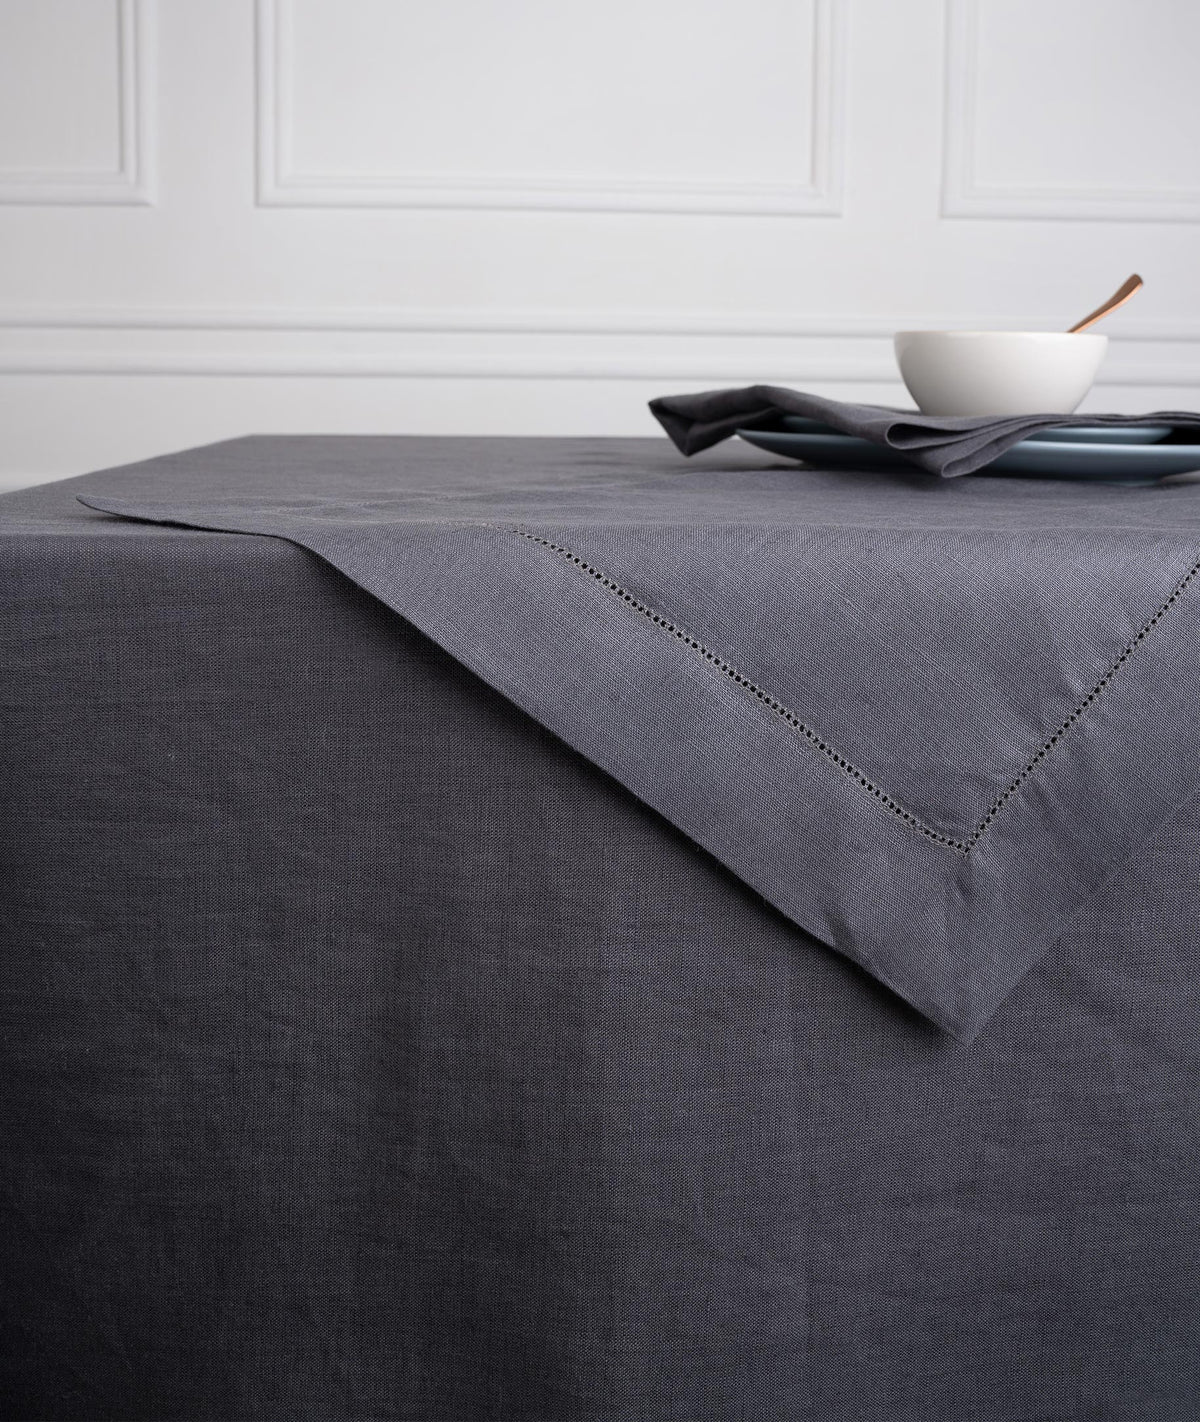 Charcoal  Grey Linen Tablecloth - Hemmed